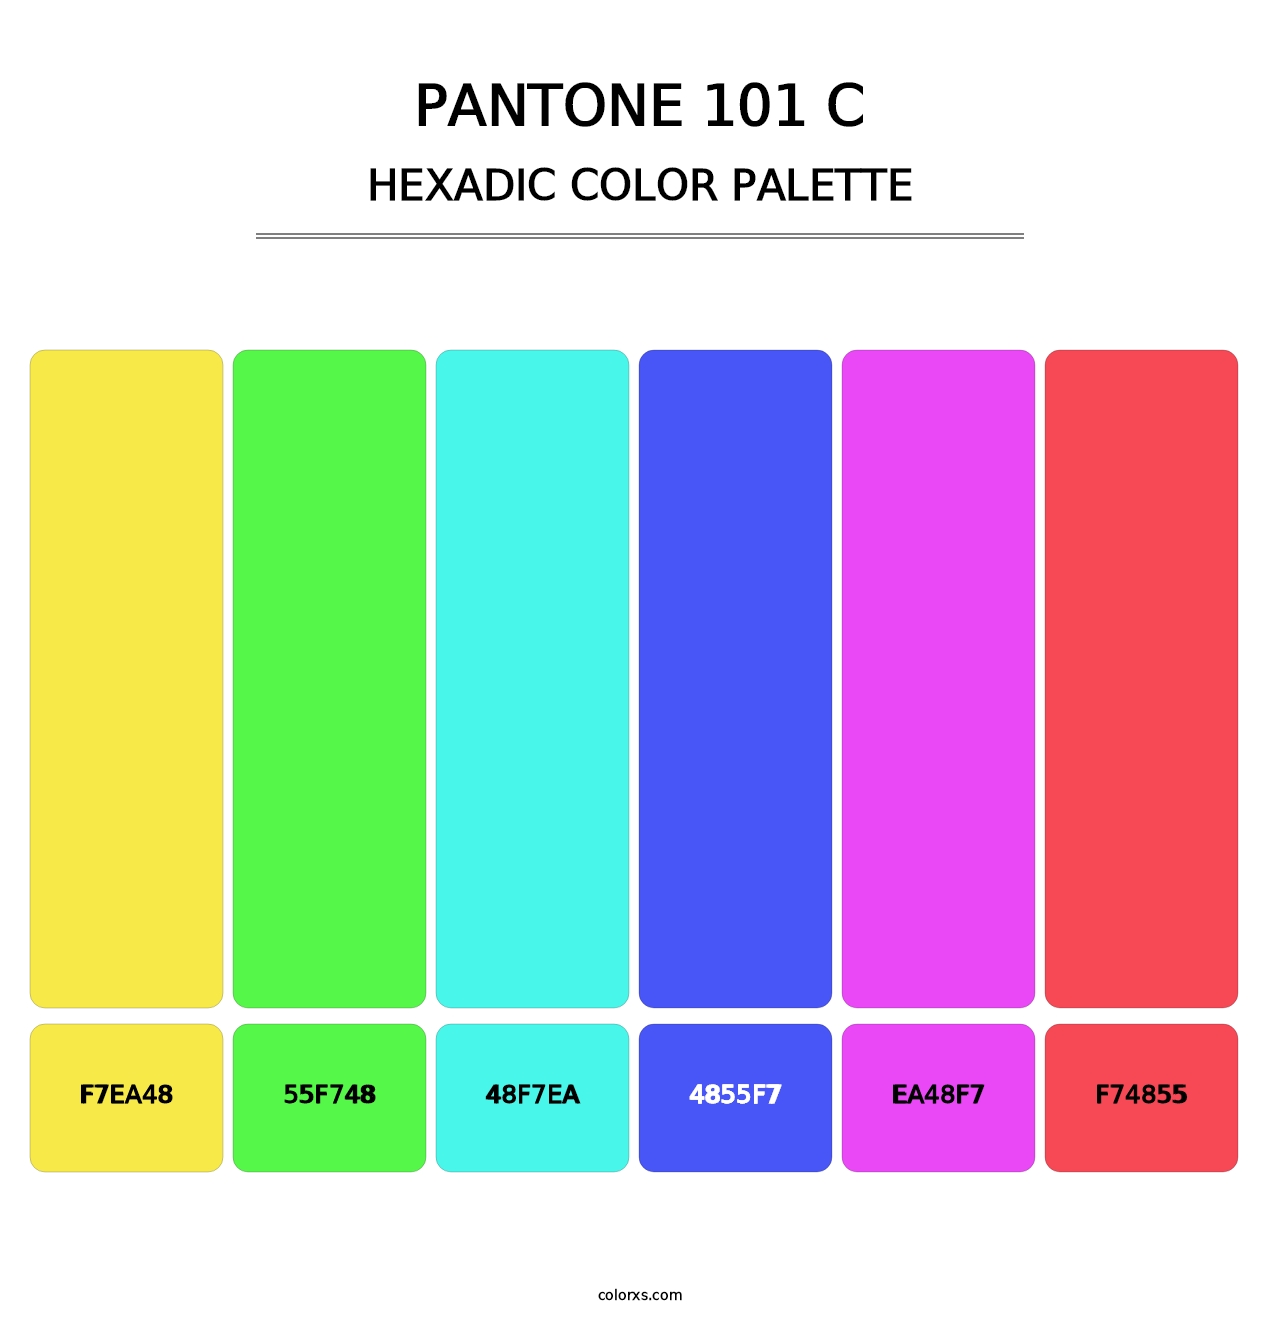 PANTONE 101 C - Hexadic Color Palette